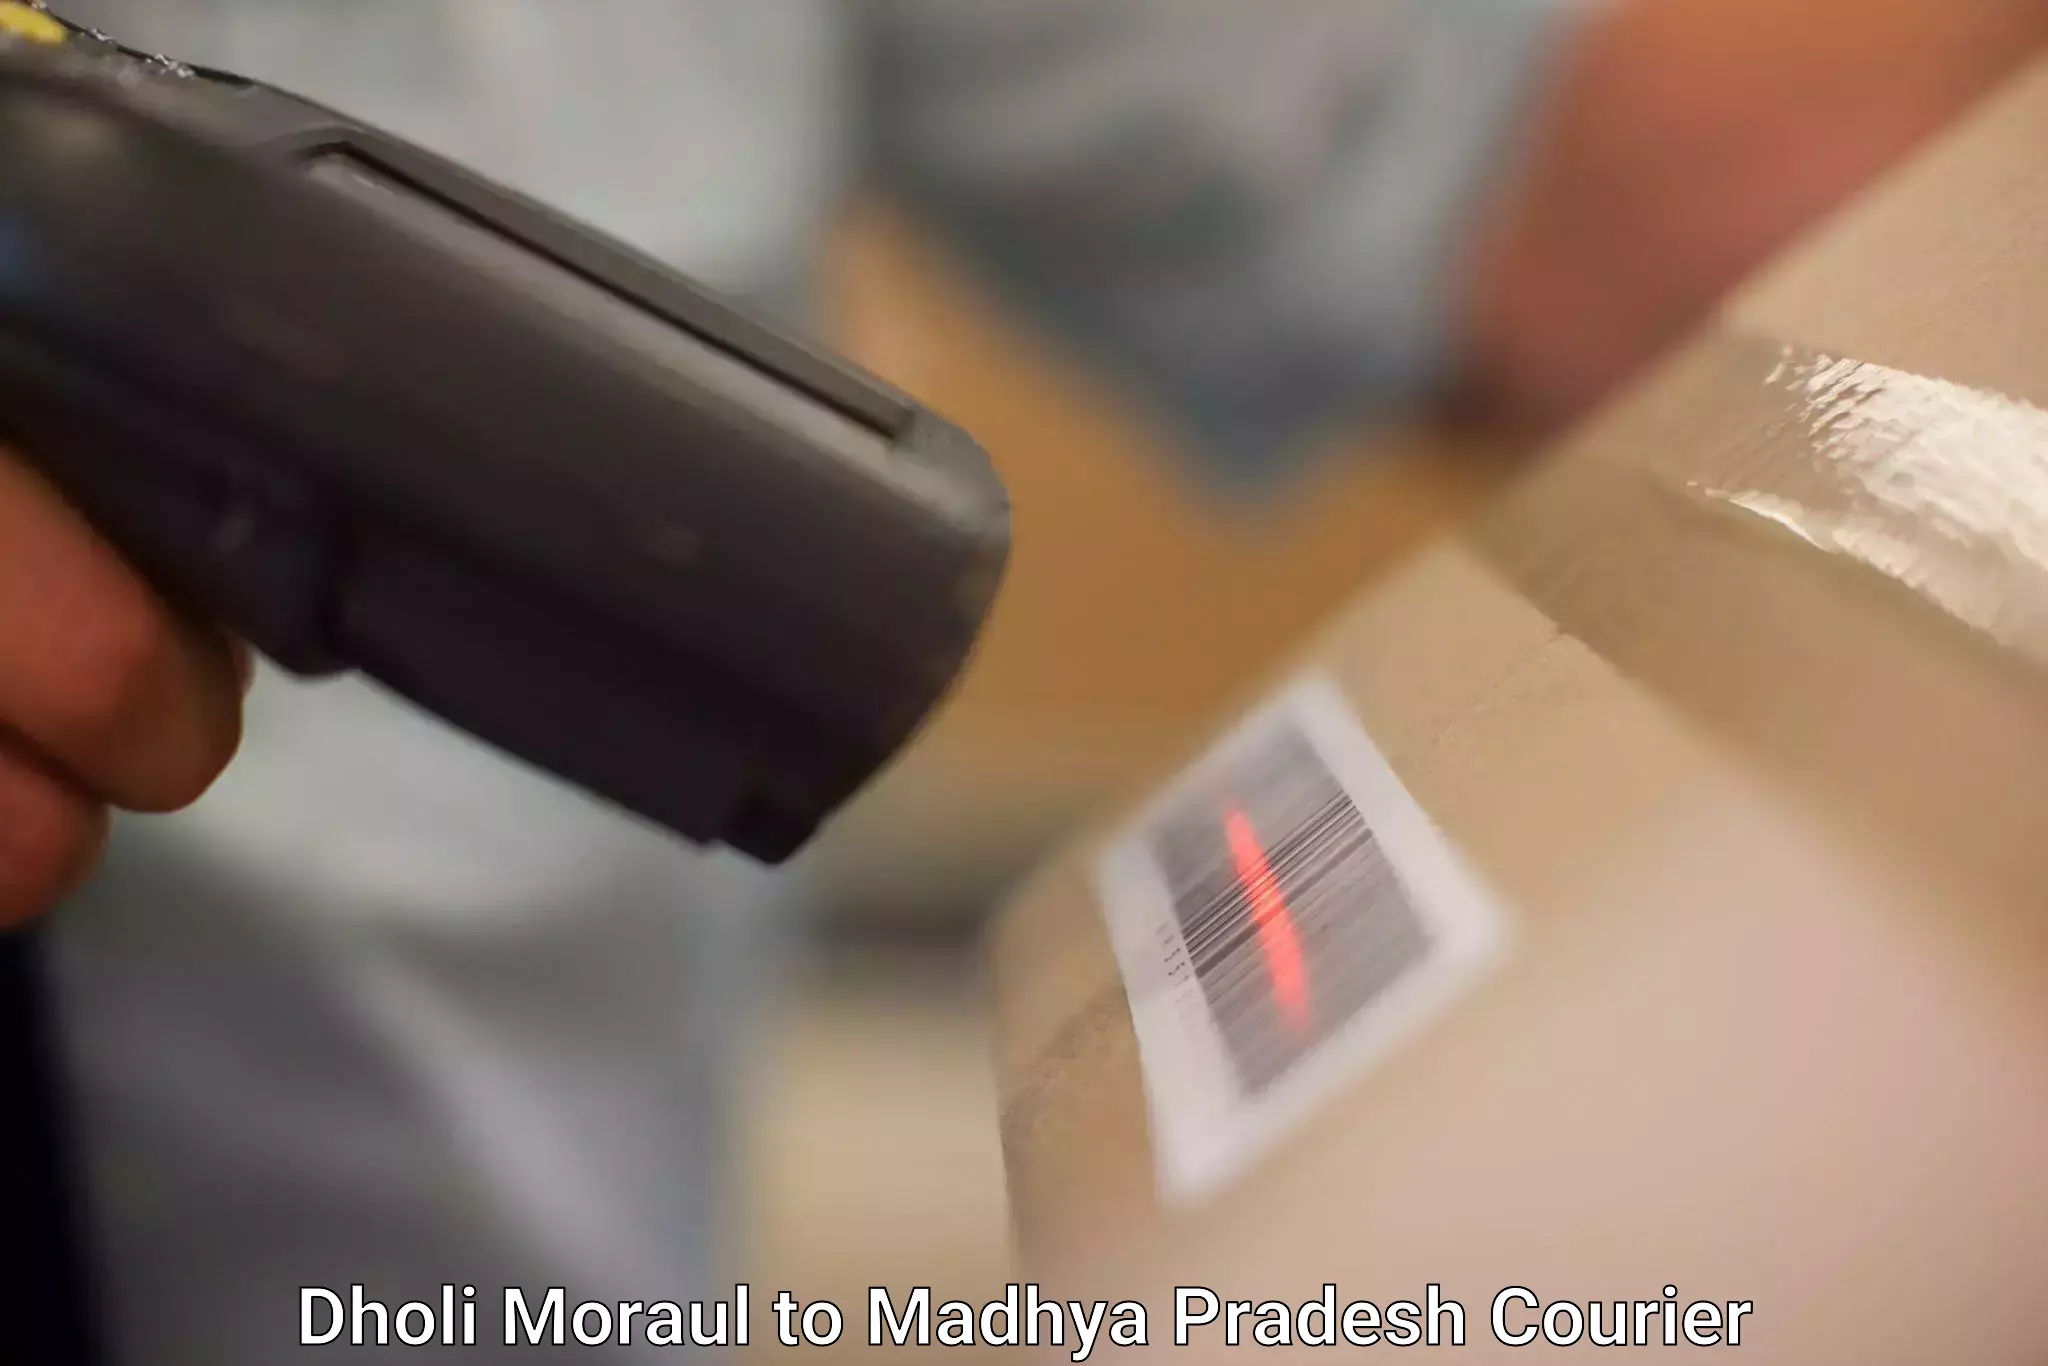 Professional courier handling Dholi Moraul to Vidisha